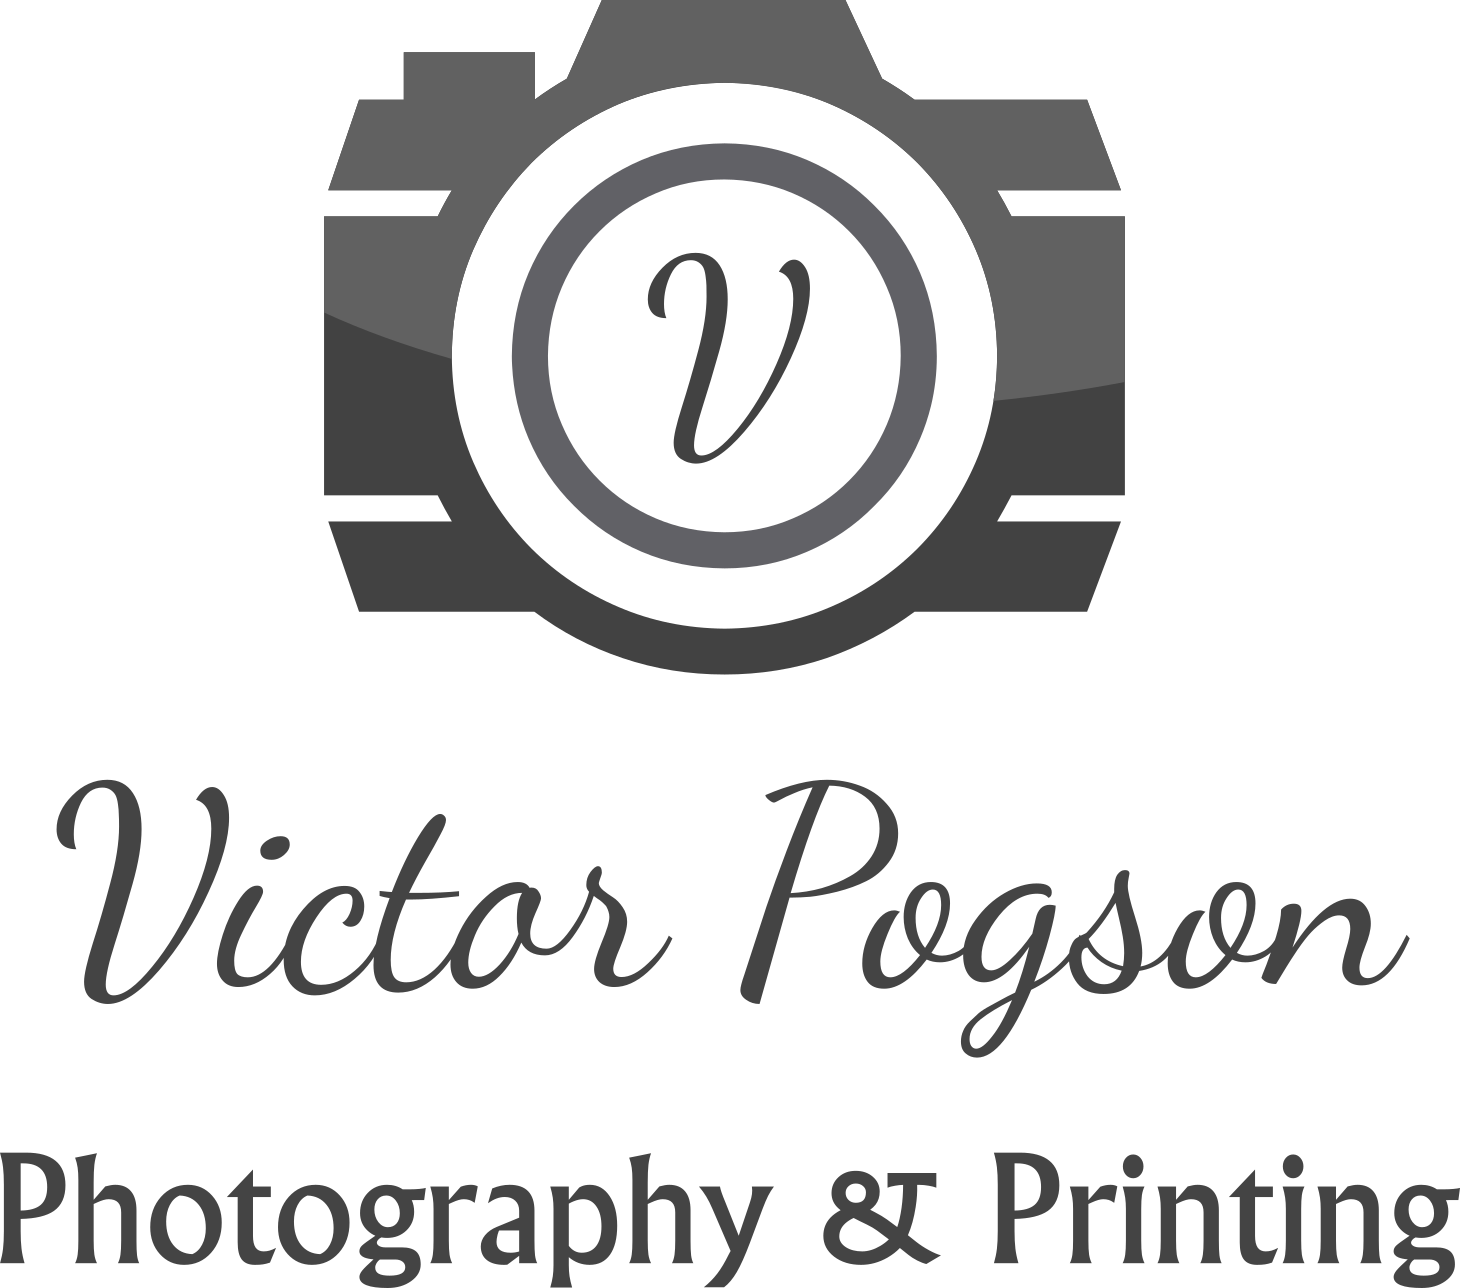 Victor Pogson Photo Printing